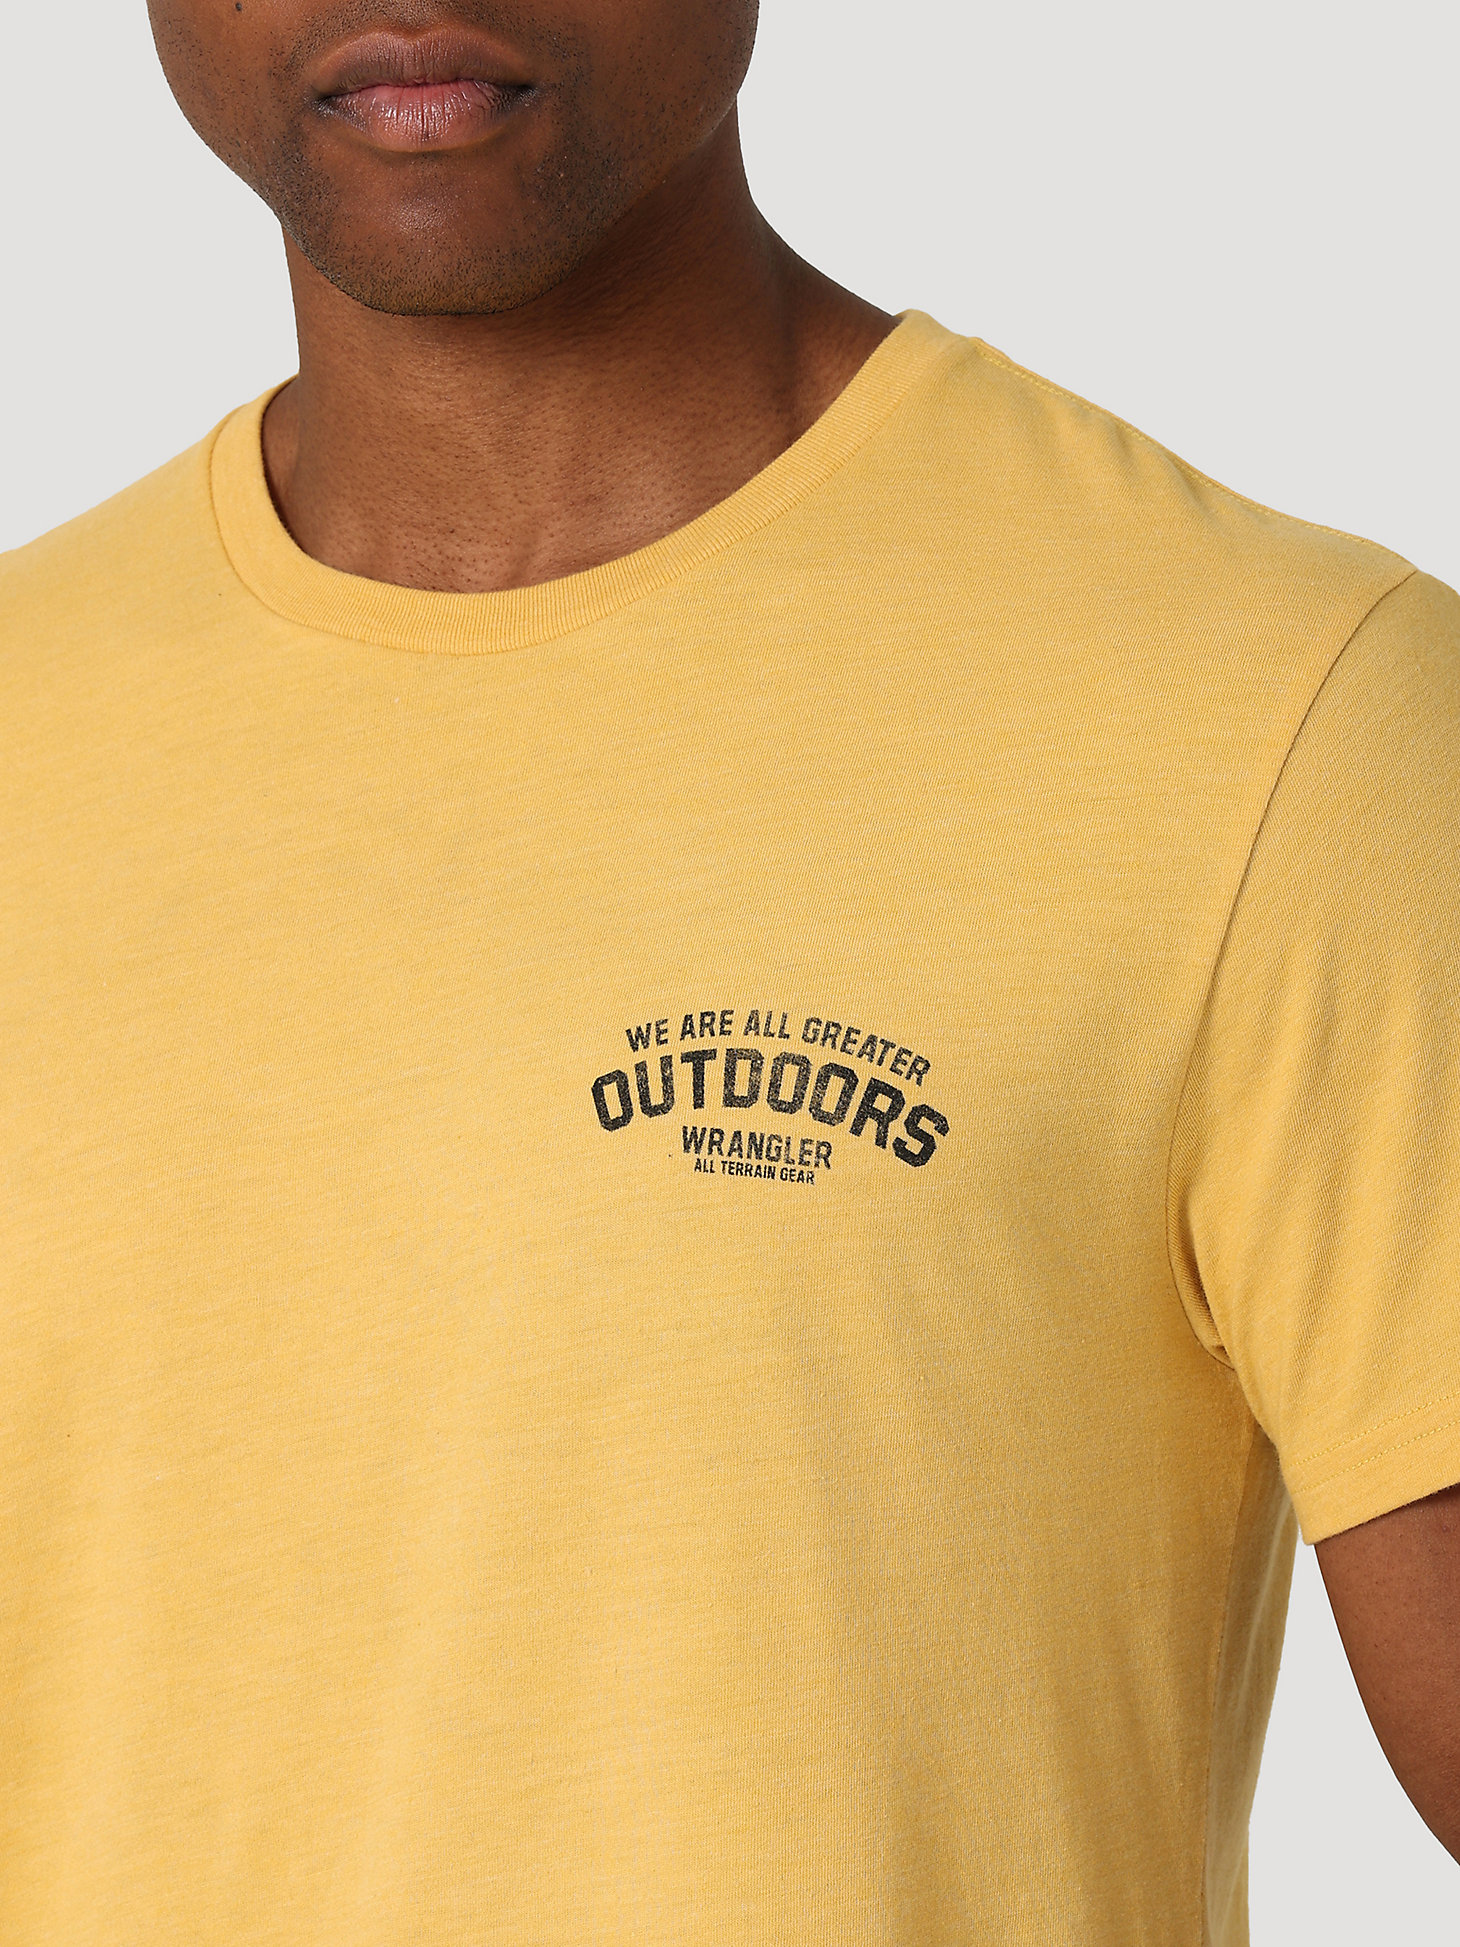 ATG By Wrangler™ Men's Back Graphic T-Shirt in Ochre alternative view 3